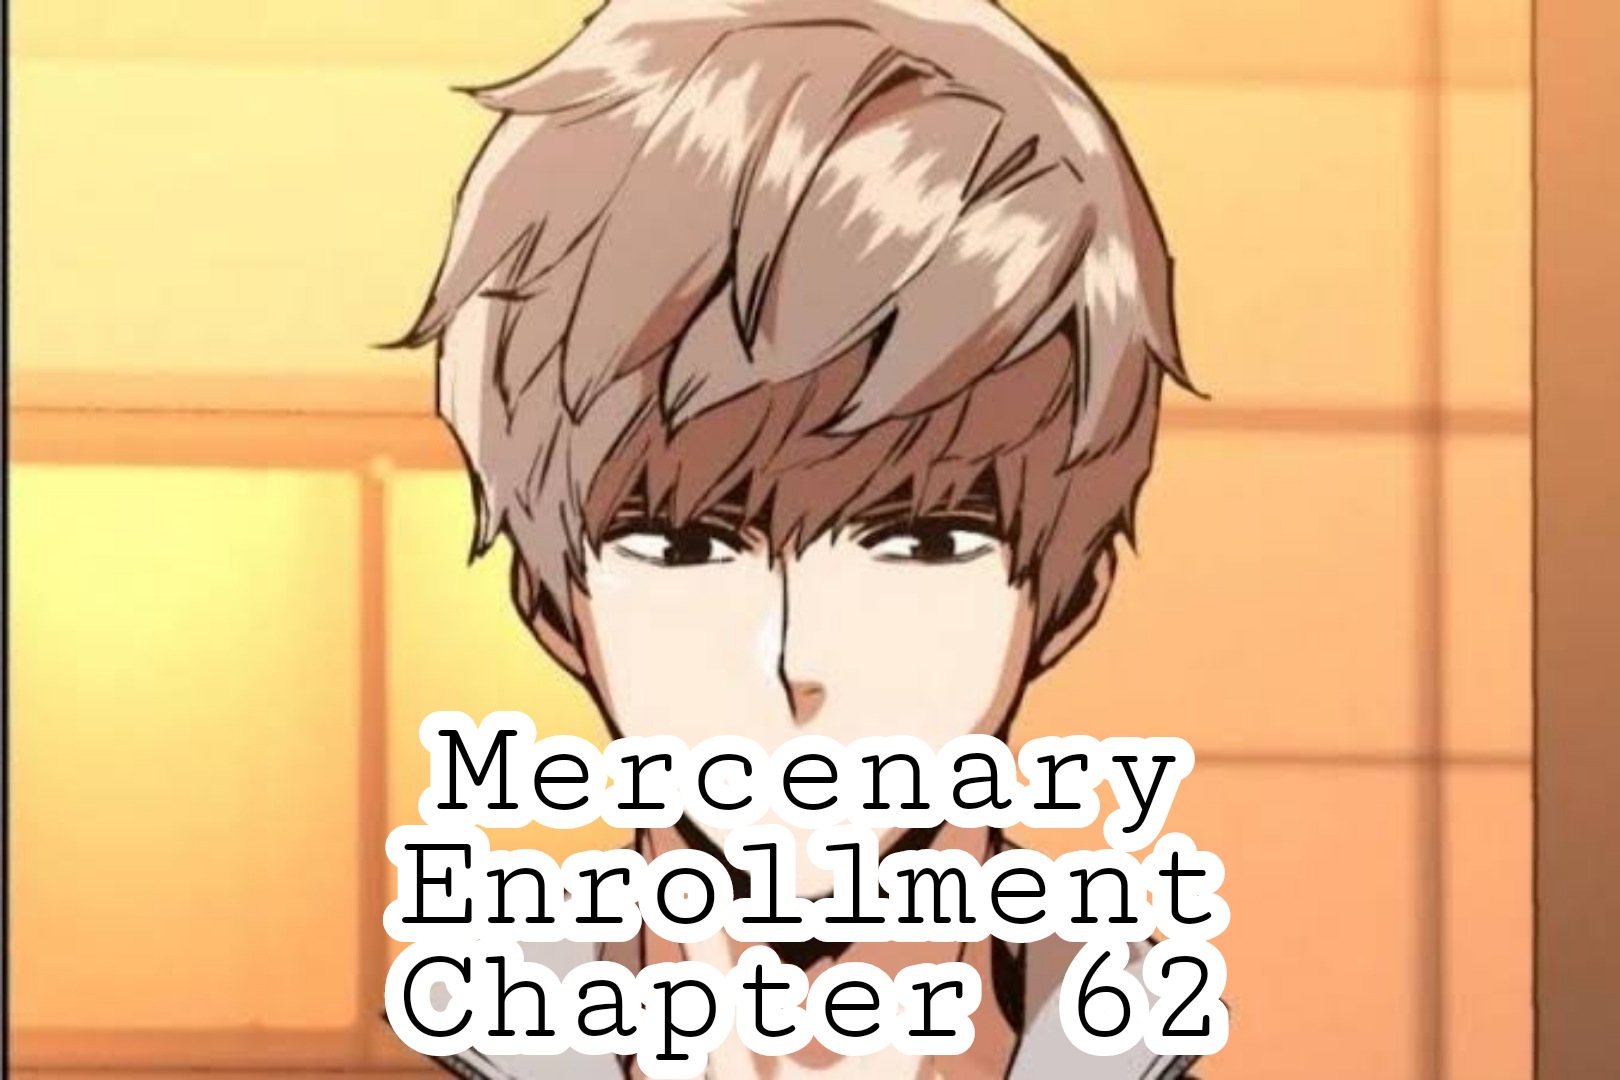 Манга прирожденный наемник 179. Mercenary Enrollment. Mercenary Enrollment Manga. Манхва Mercenary Enrollment. Mercenary Enrollment pls like and Subscribe.